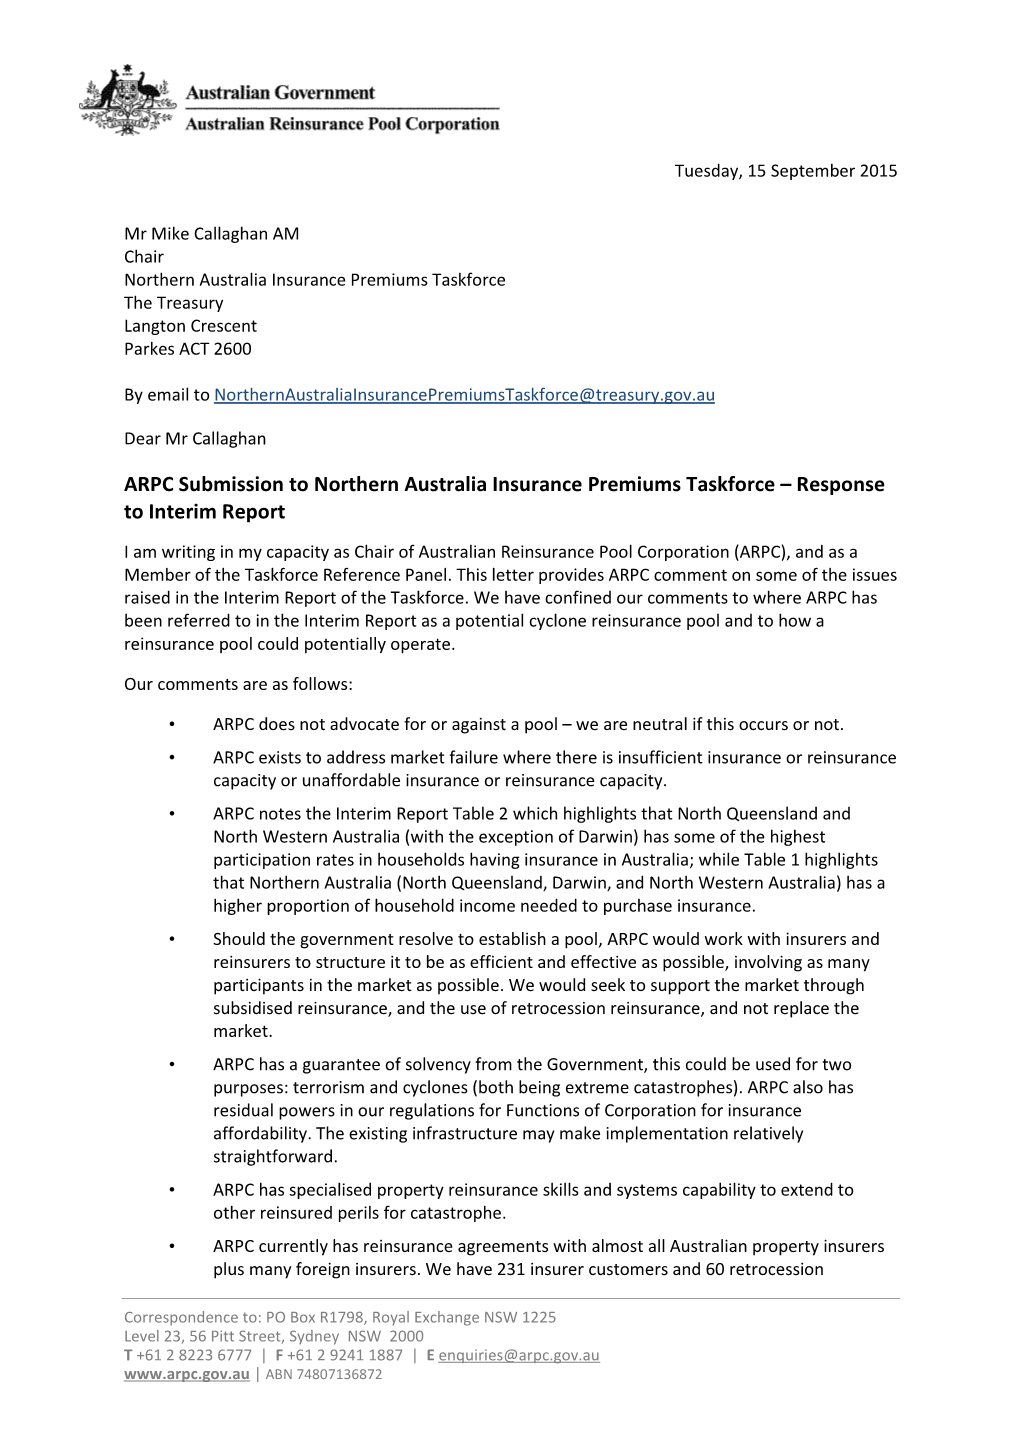 ARPC Submission to Northern Australia Insurance Premiums Taskforce – Response to Interim Report